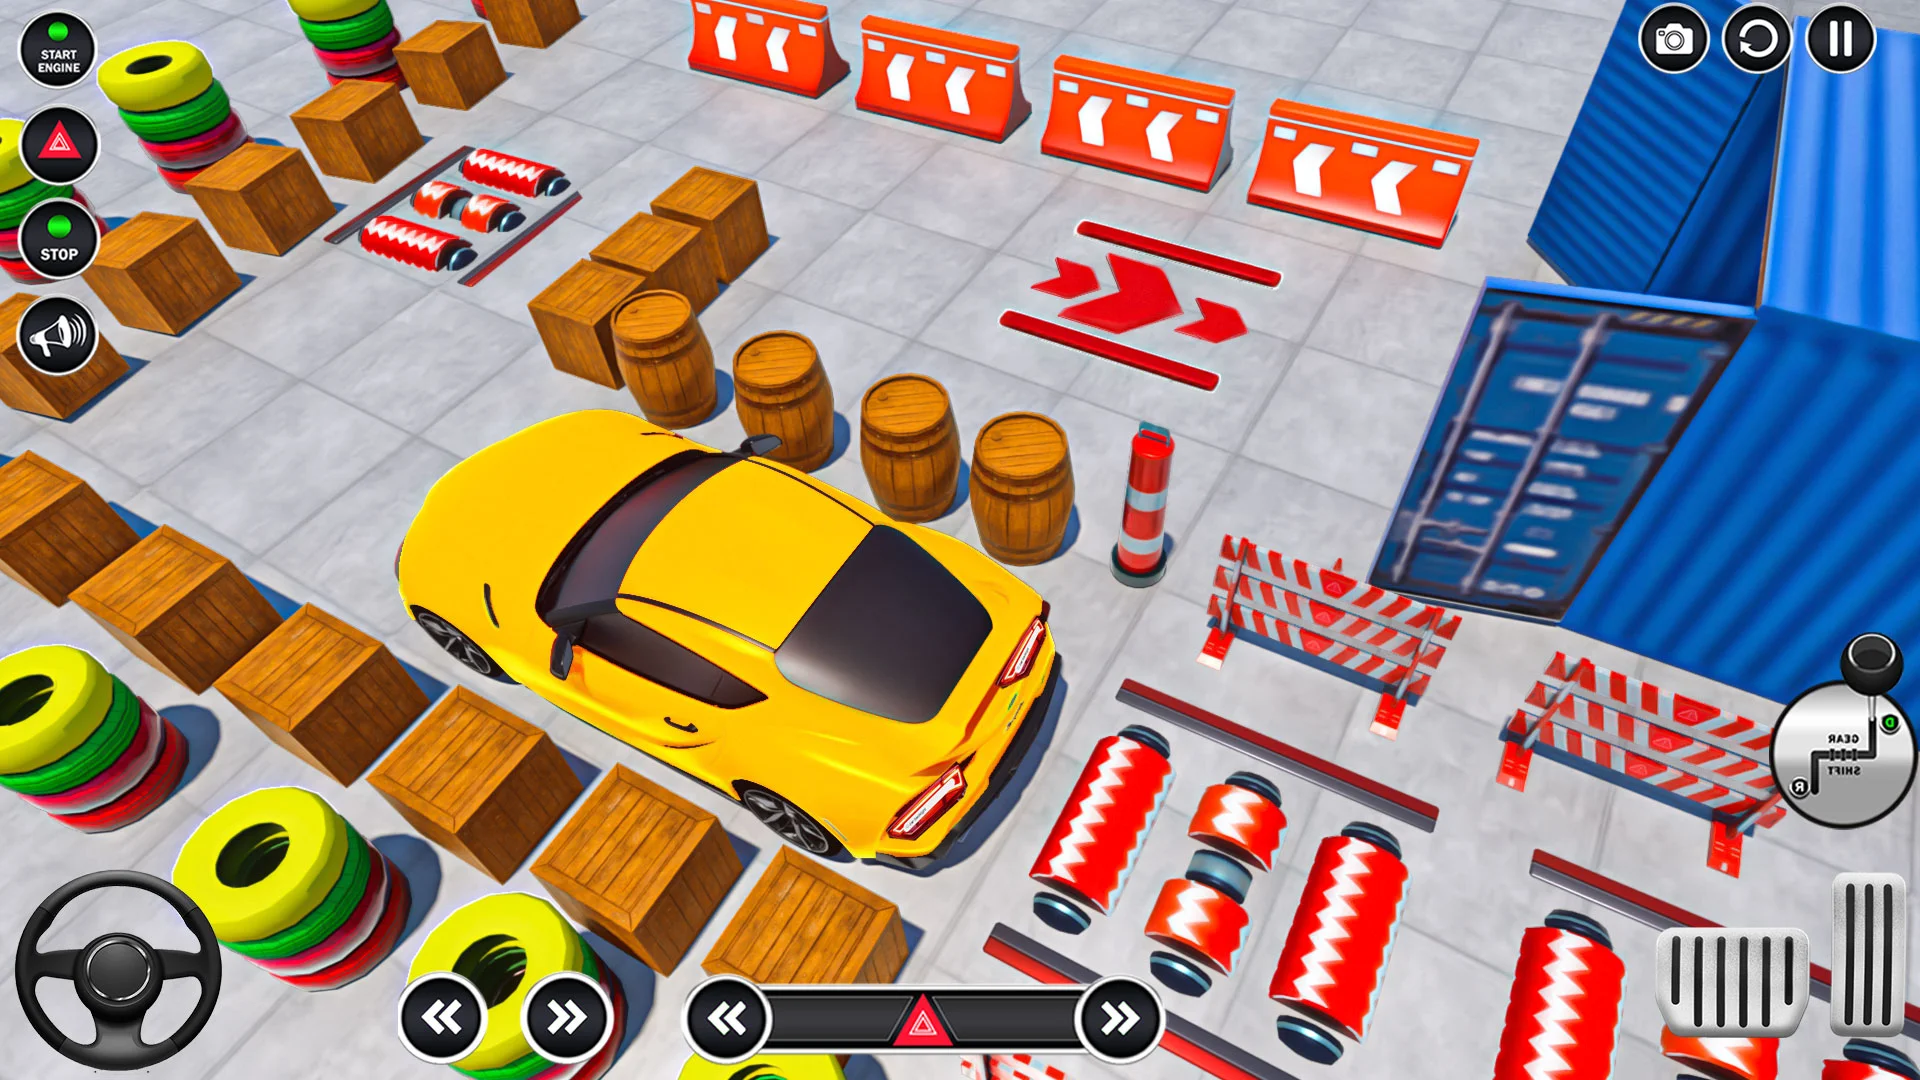 Manual Car Parking Mania Games